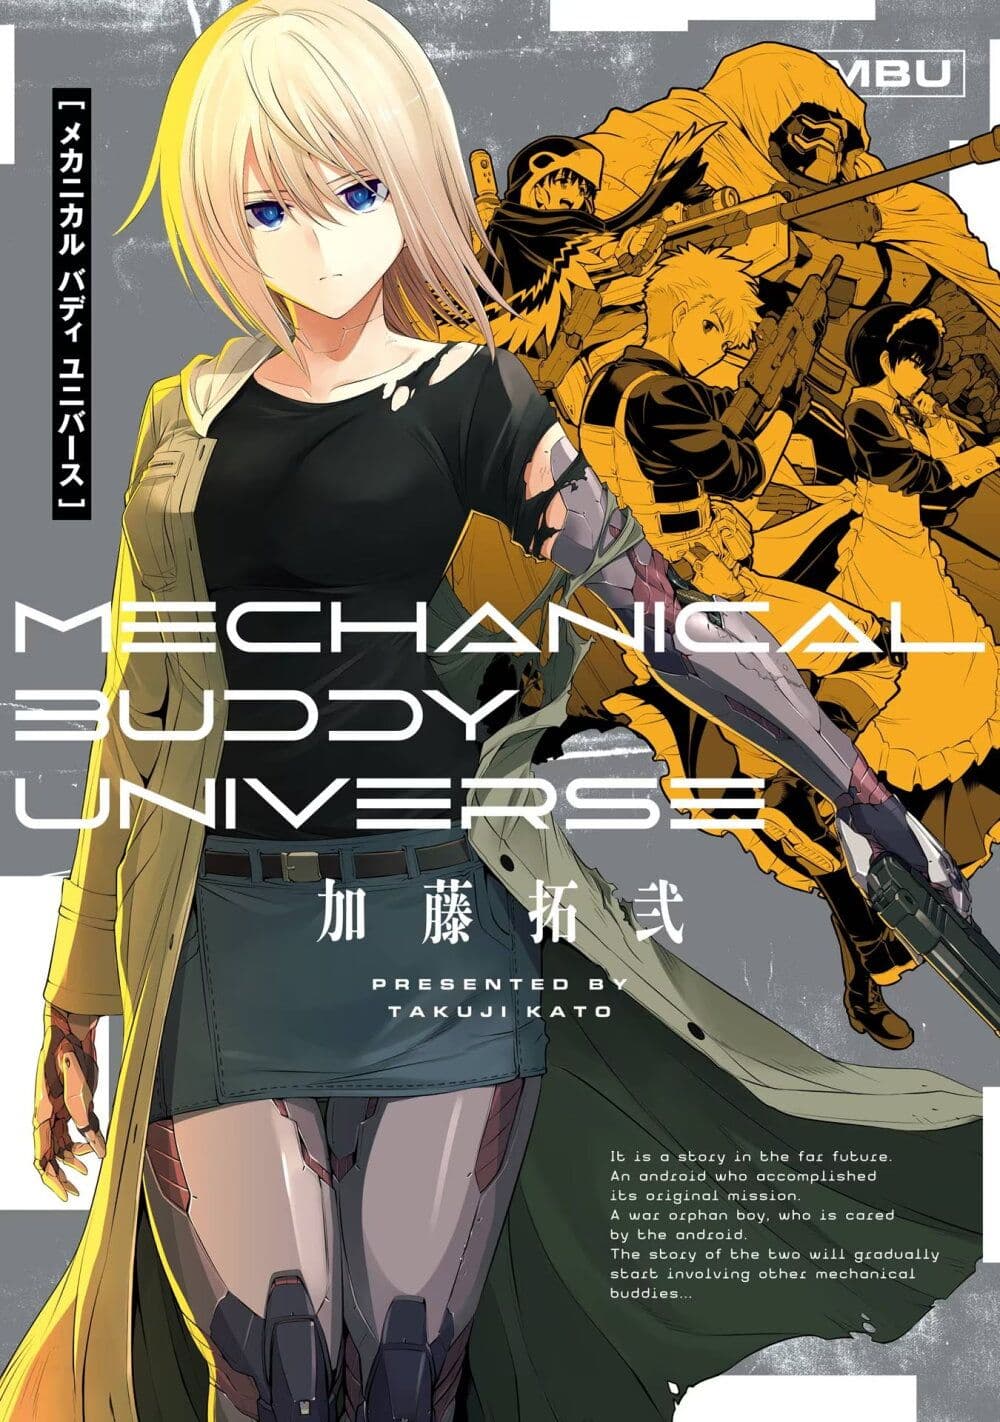 Mechanical Buddy Universe ตอนที่ 1 (1)